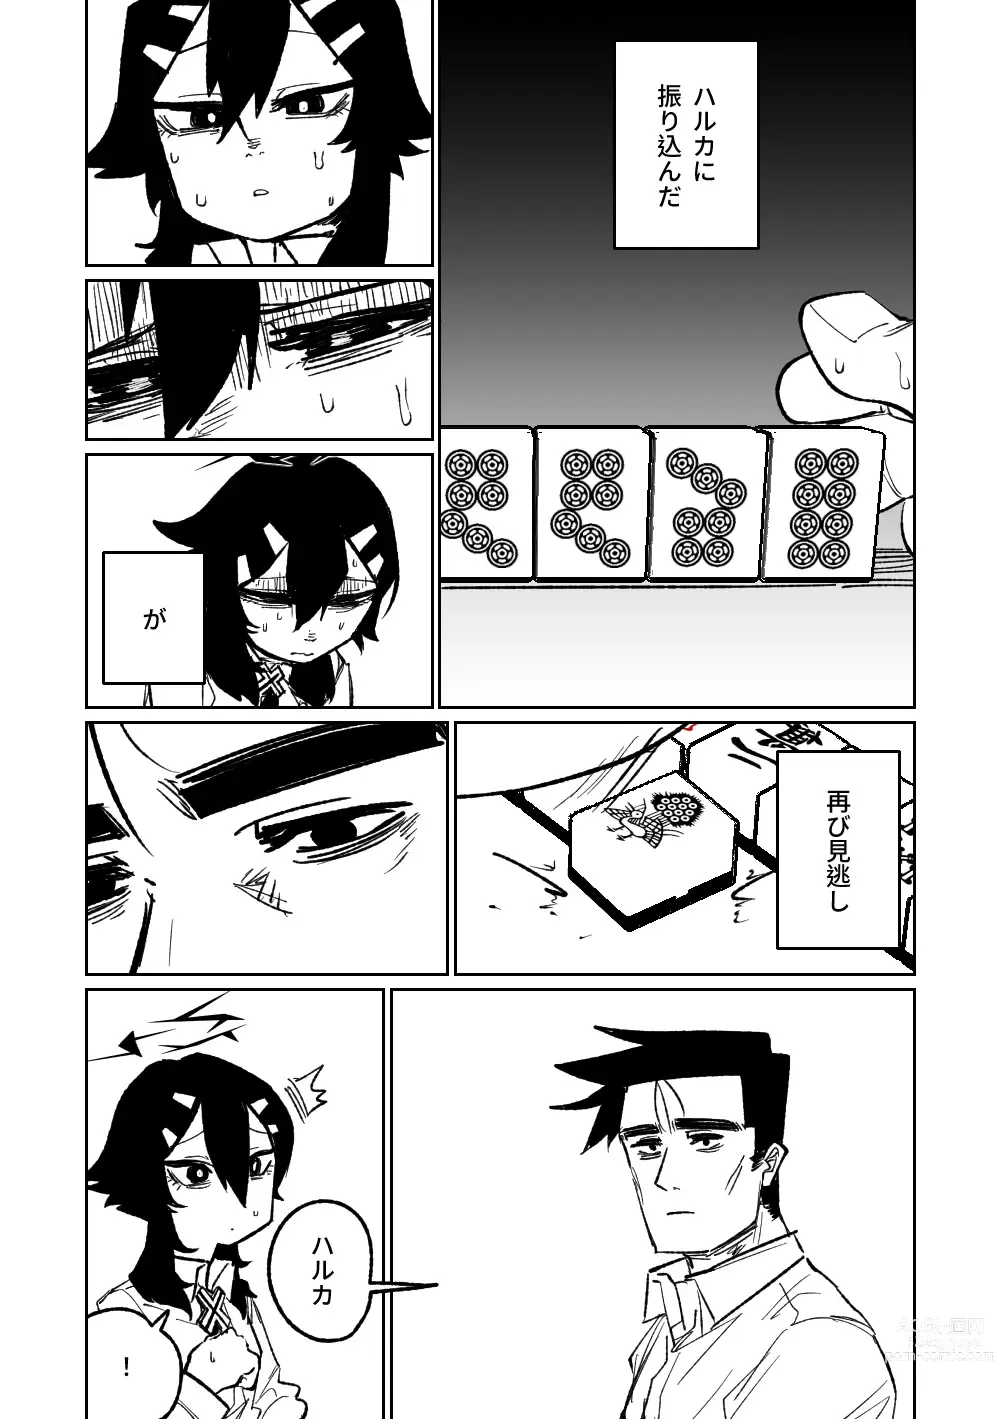 Page 185 of doujinshi Benriya 68 Datsui Mahjong Ichi ~Sankaisen~